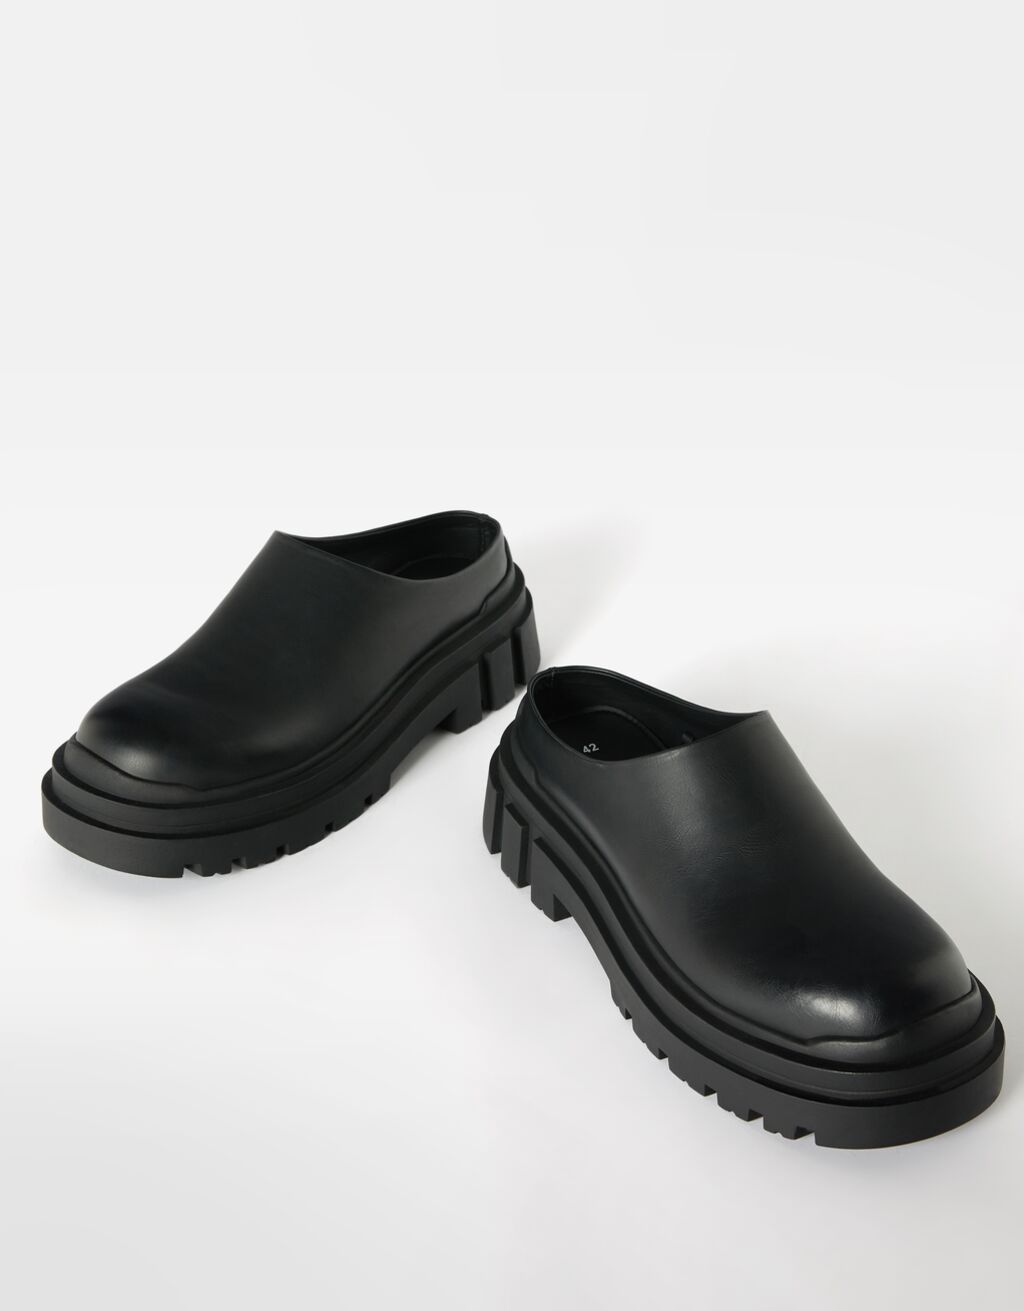 Men’s clogs with track soles - Man | Bershka